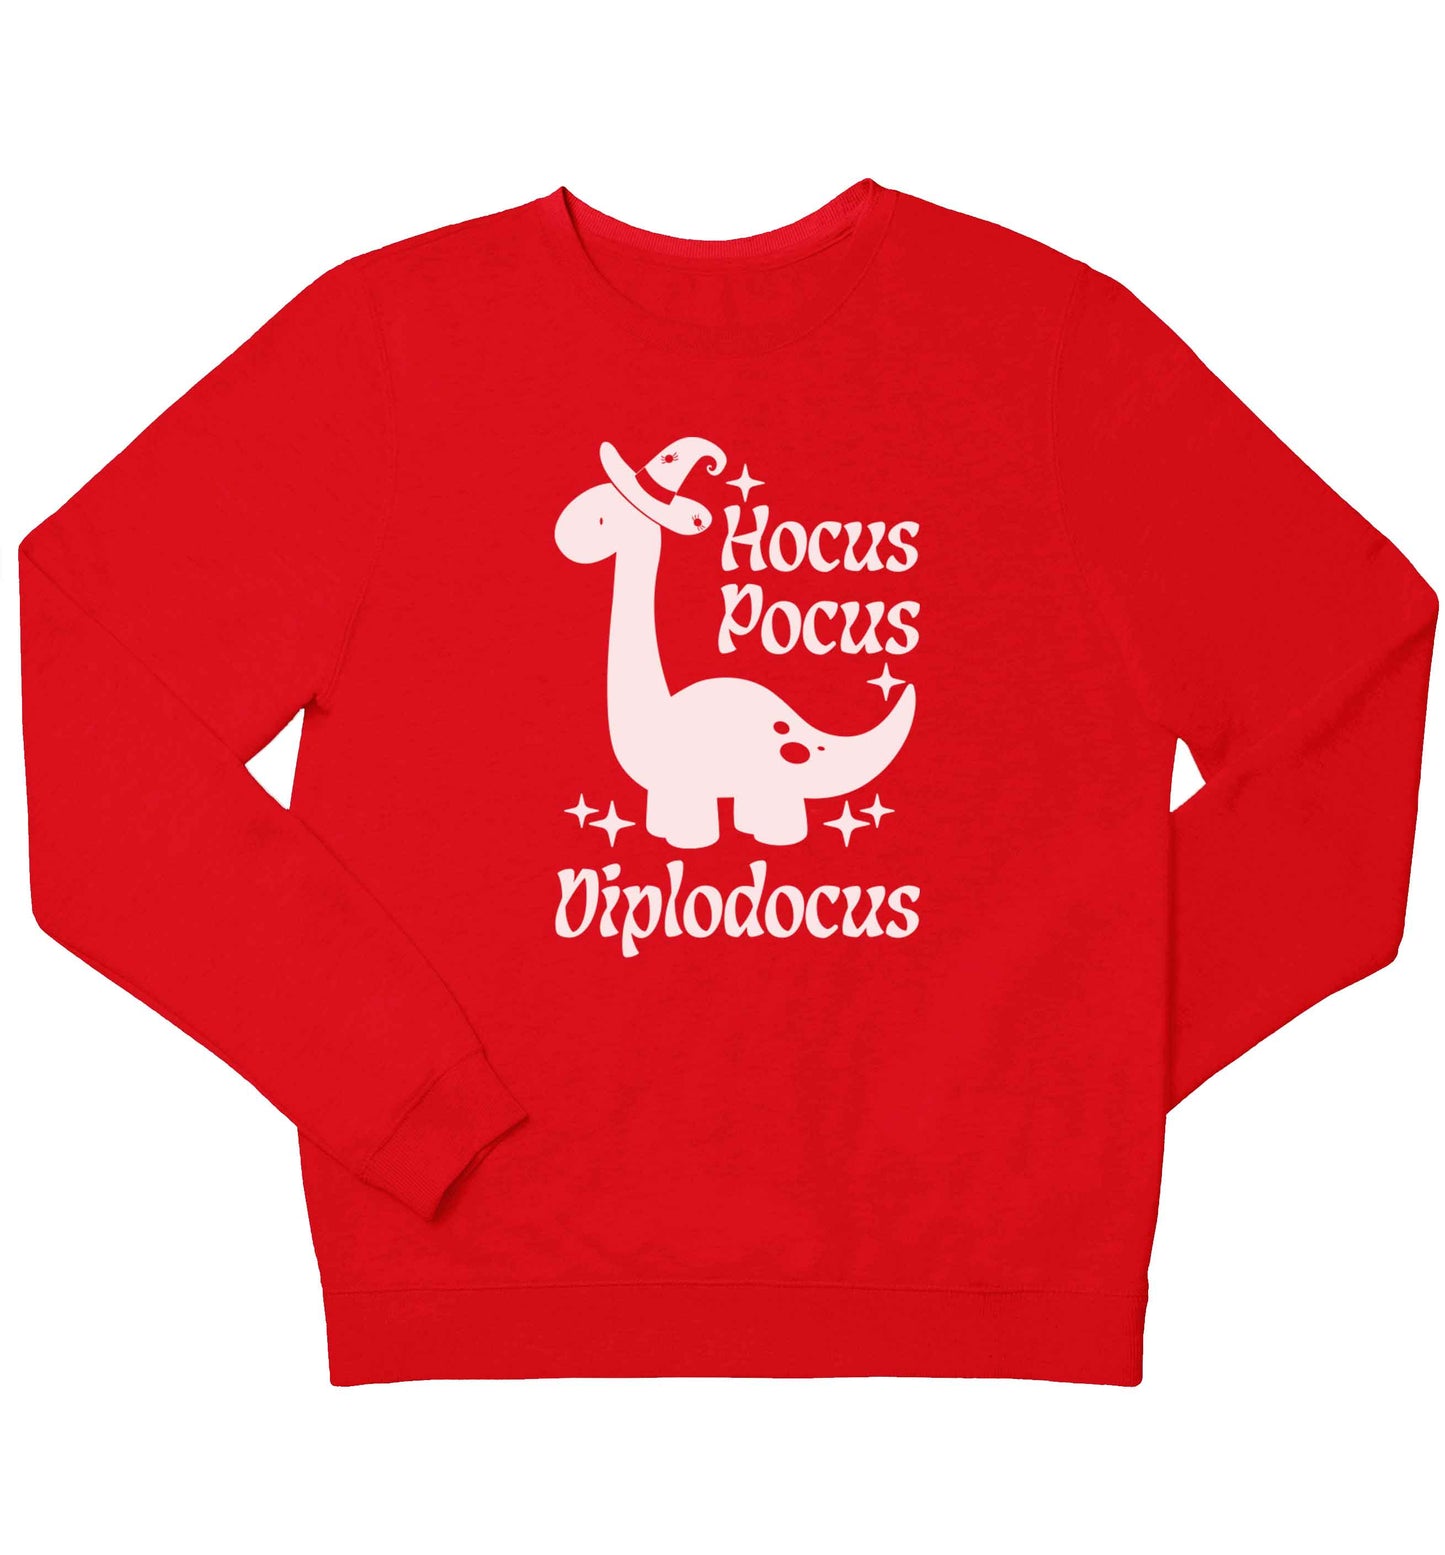 Hocus pocus diplodocus Kit children's grey sweater 12-13 Years